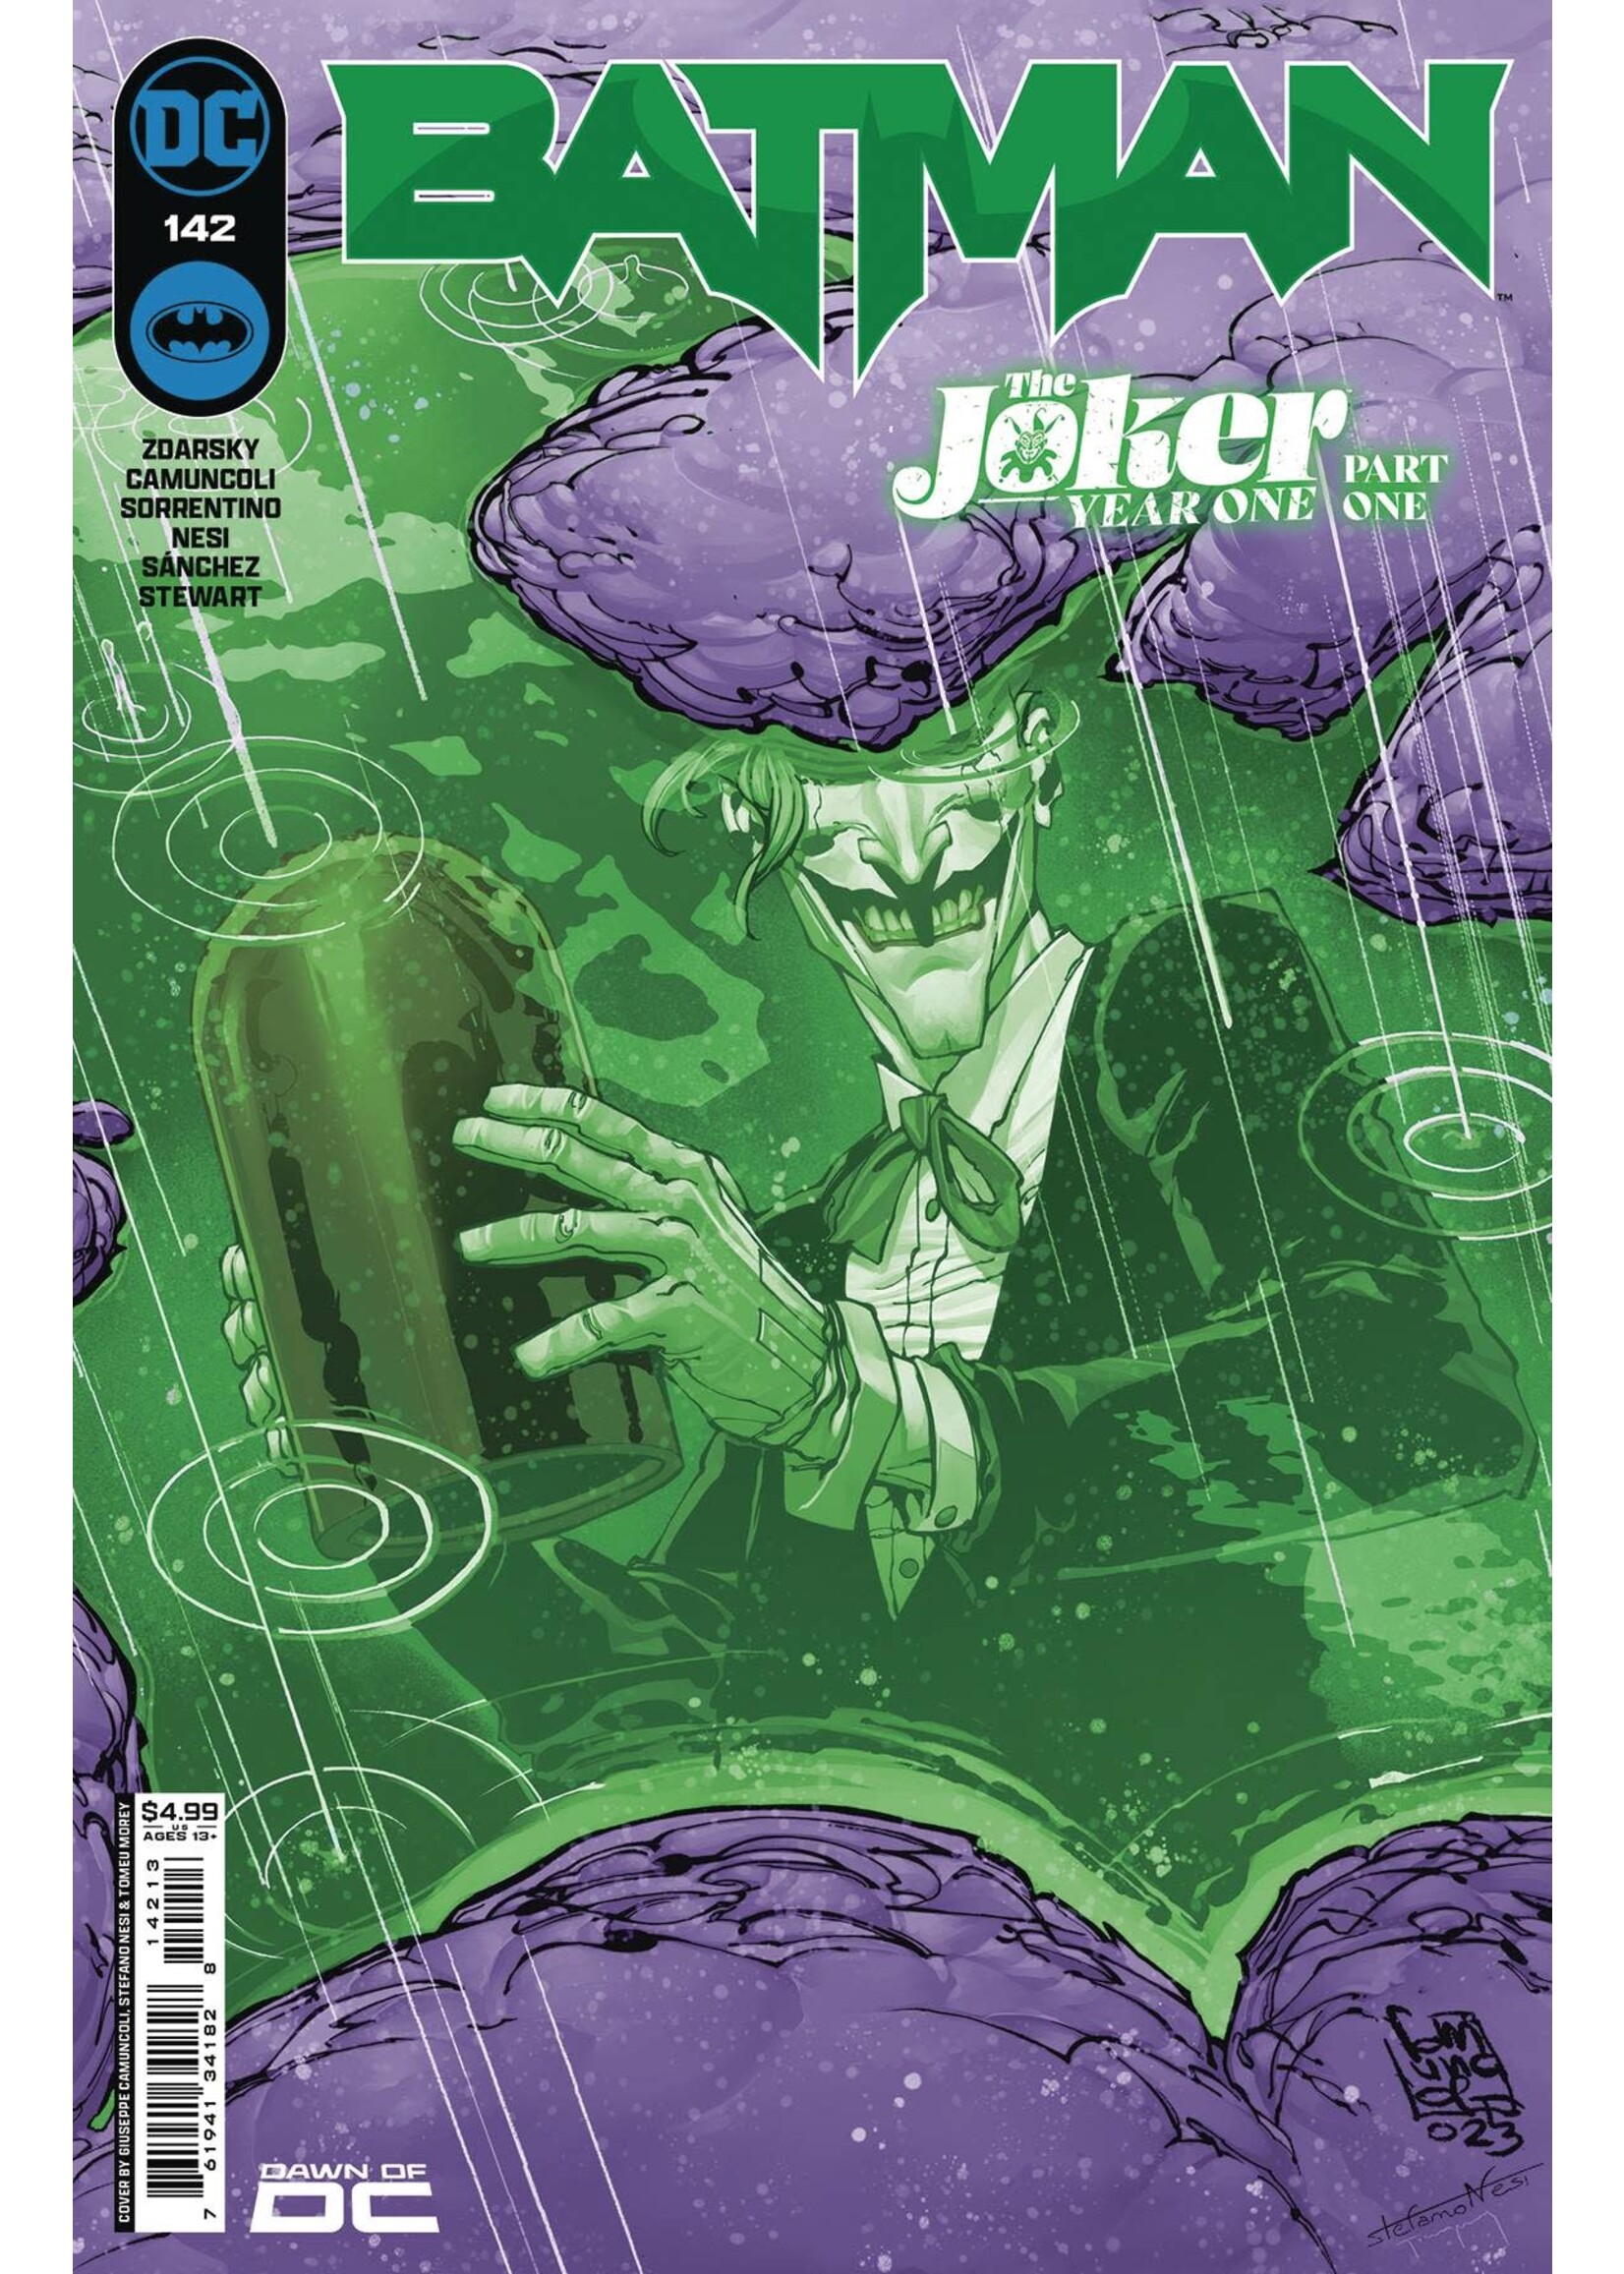 DC COMICS BATMAN #142 3RD PRINTING